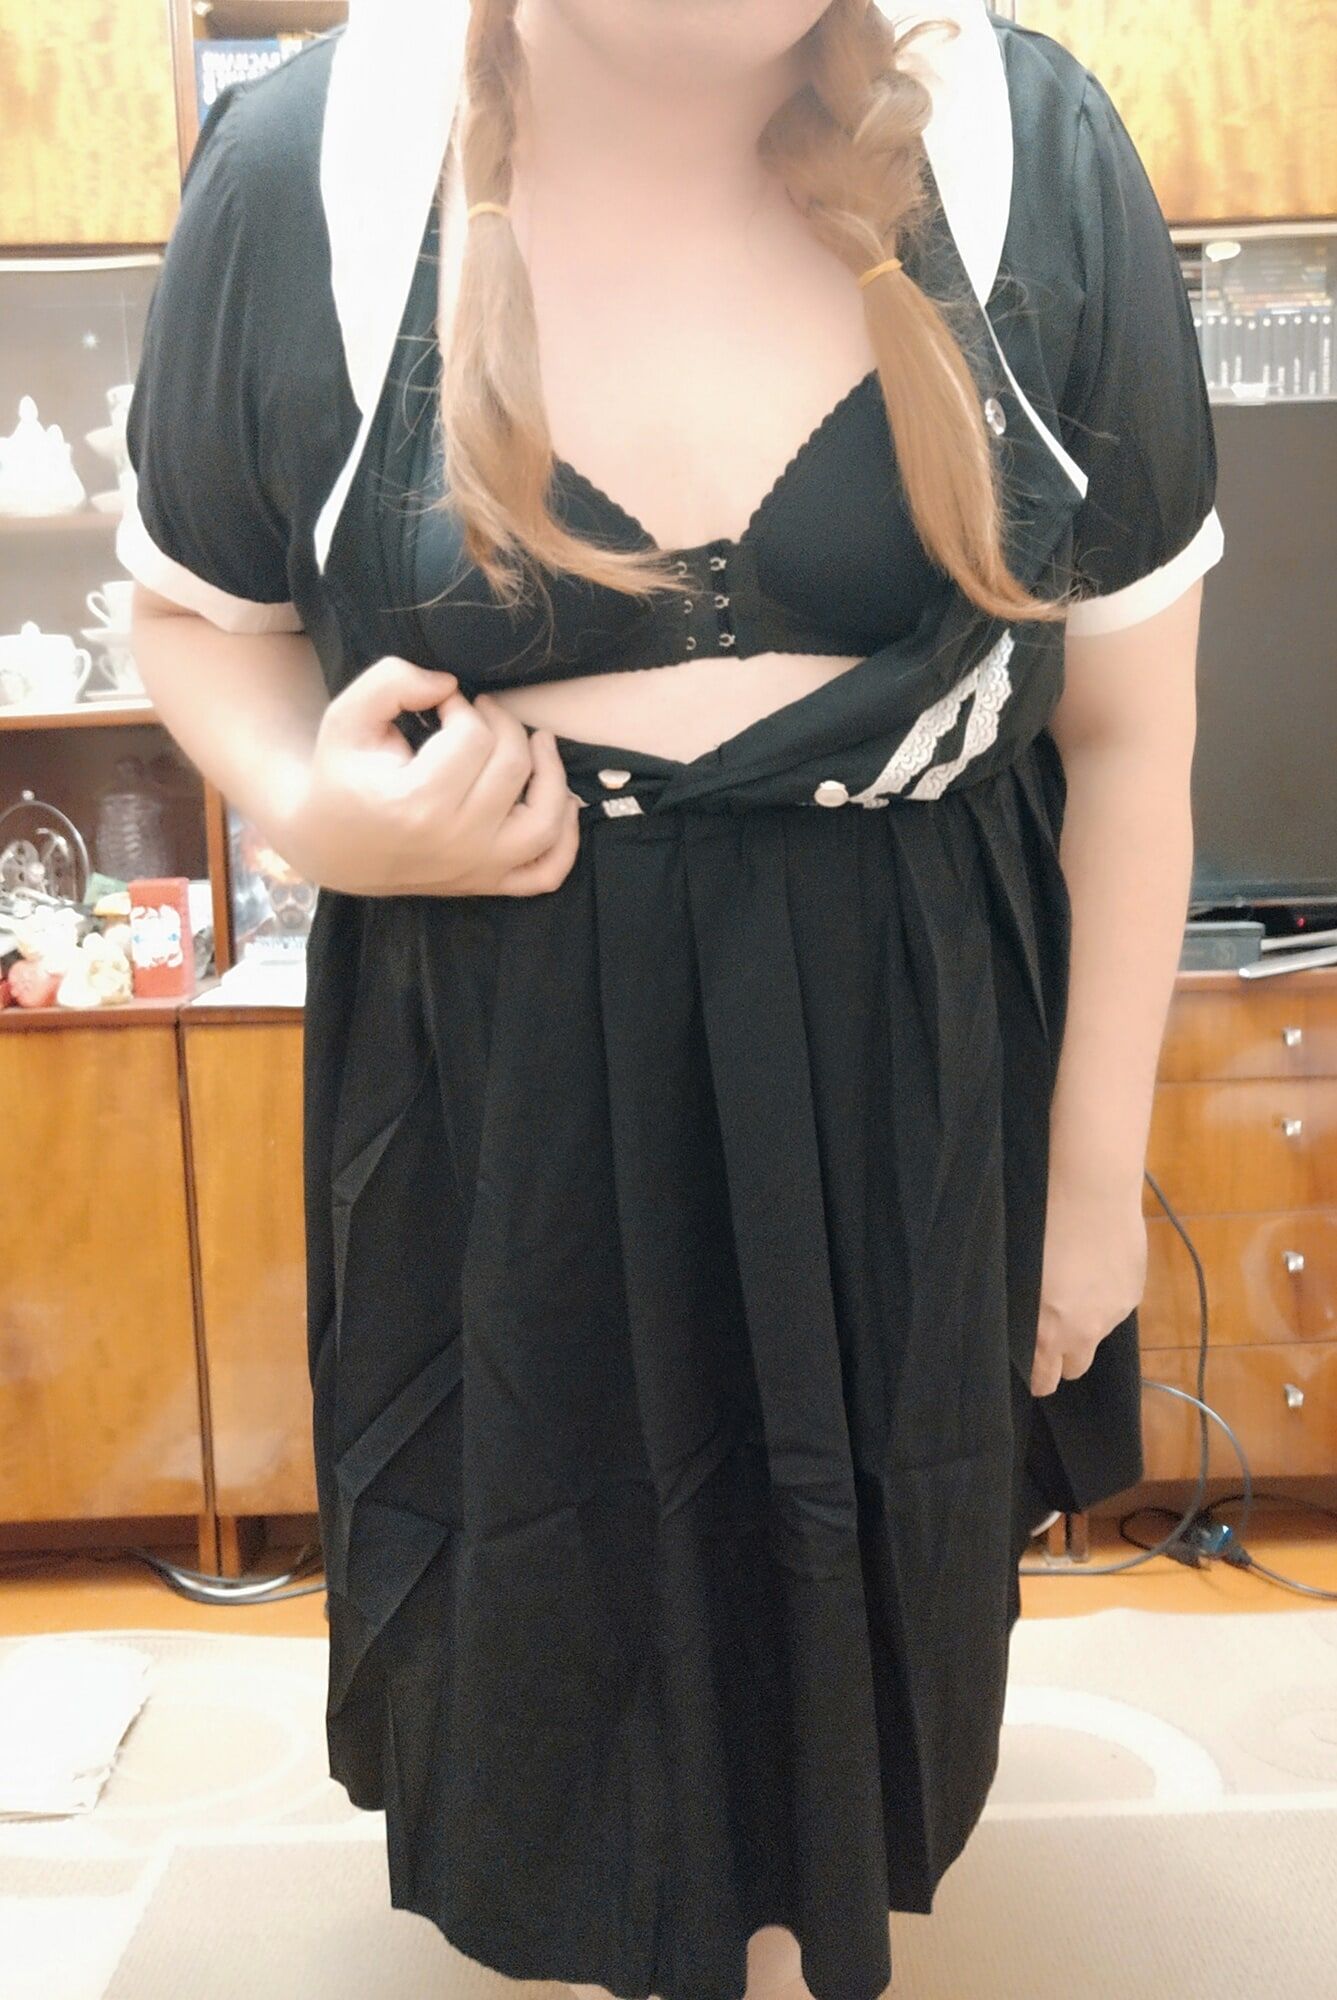 sissy Aleksa posing in new black dress #18